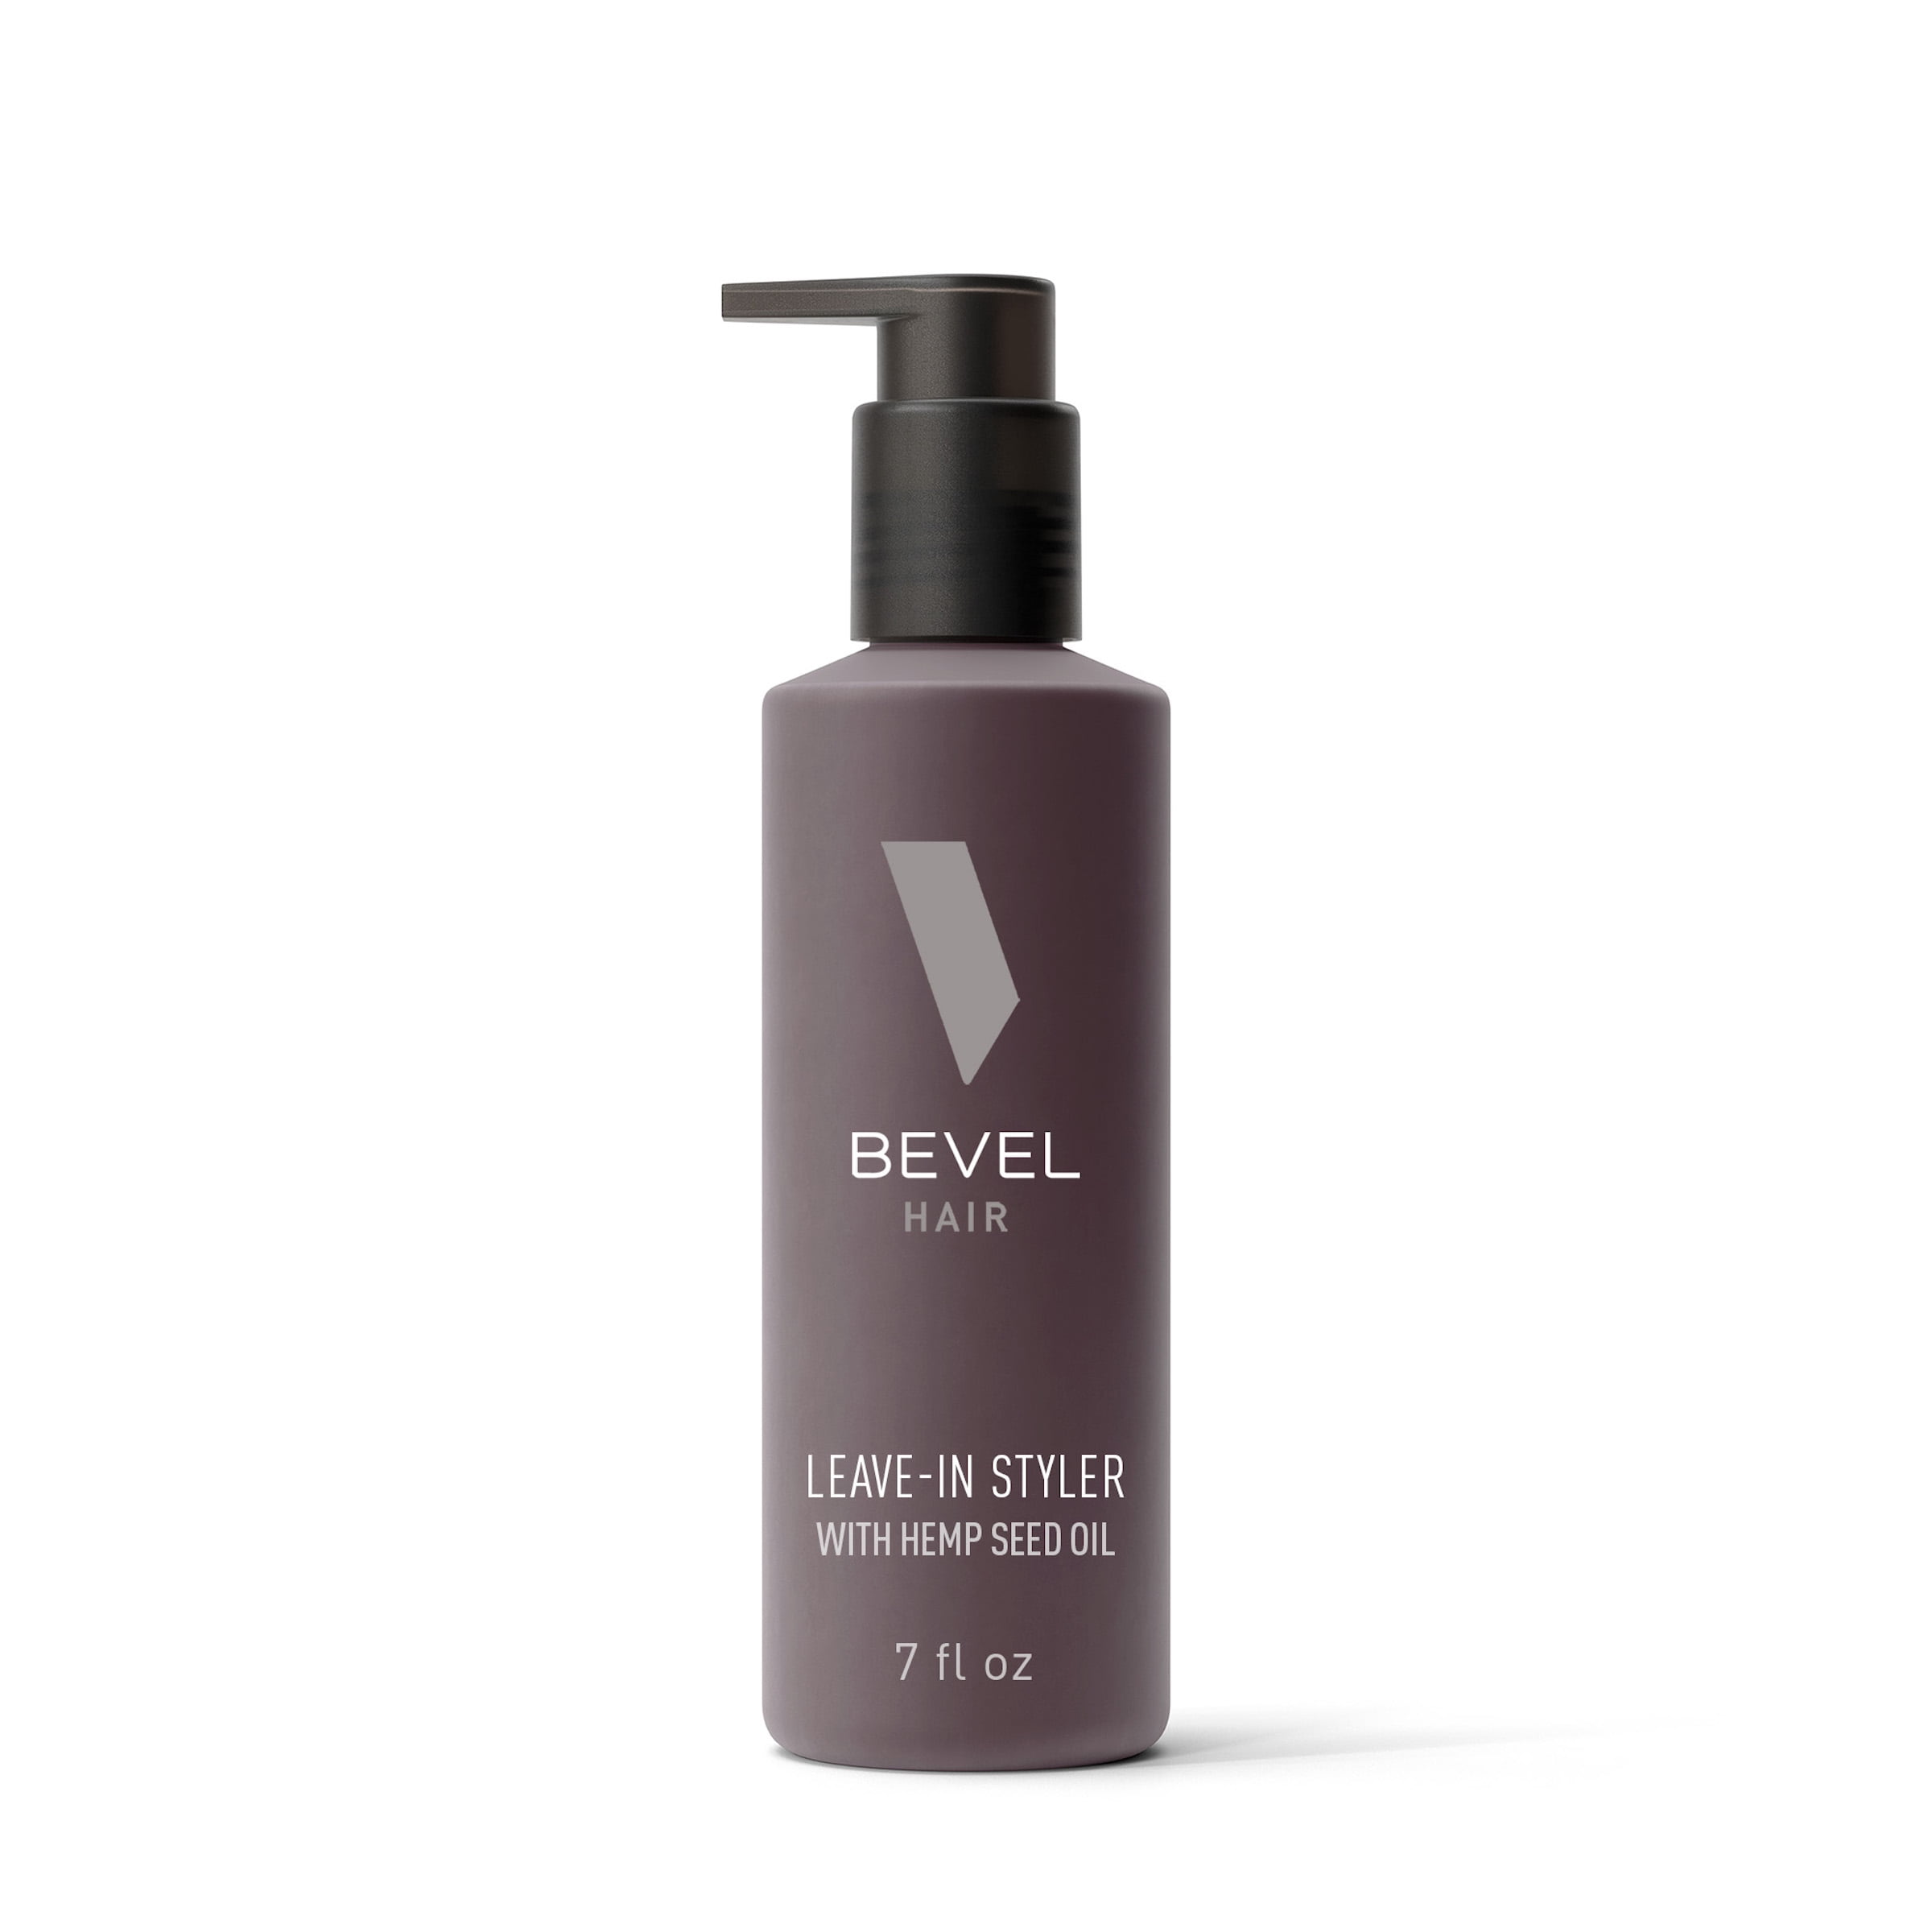 Bevel Hair Nourishing Leave-in Daily Styler, Hemp Seed Oil, 7 fl oz